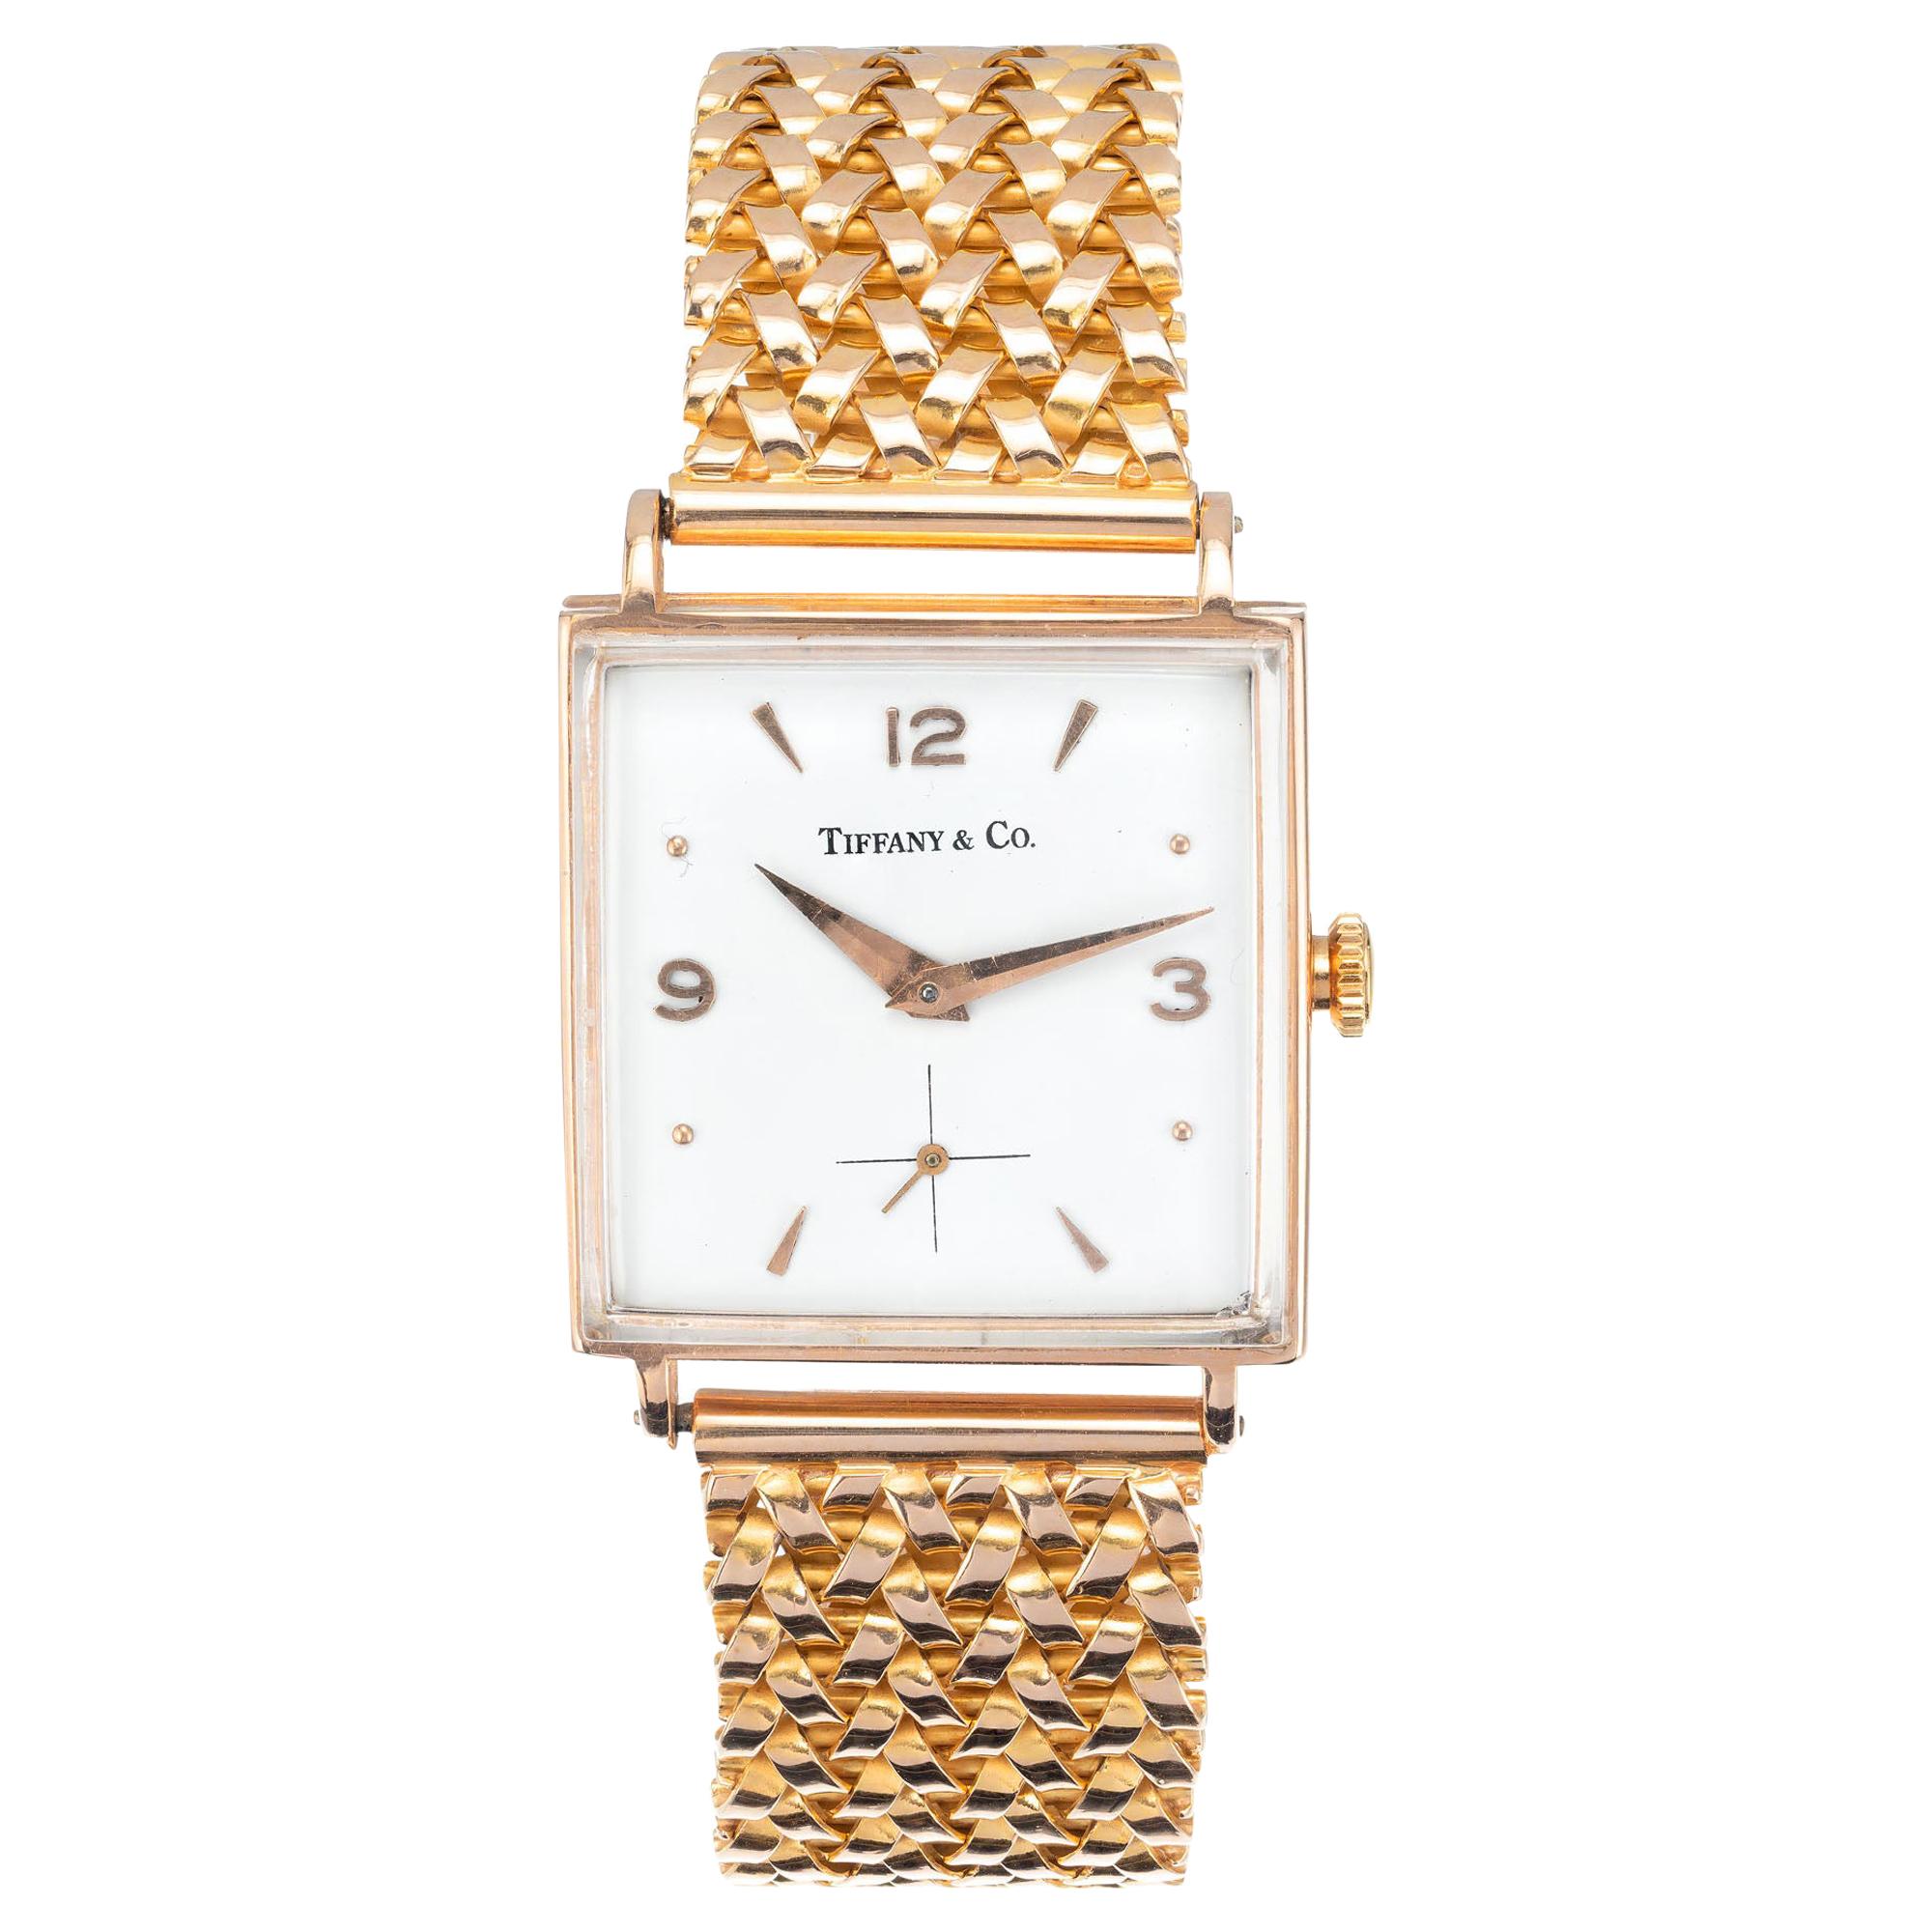 Tiffany & Co. Rose Gold Universal Genève Armbanduhr aus der Jahrhundertwende